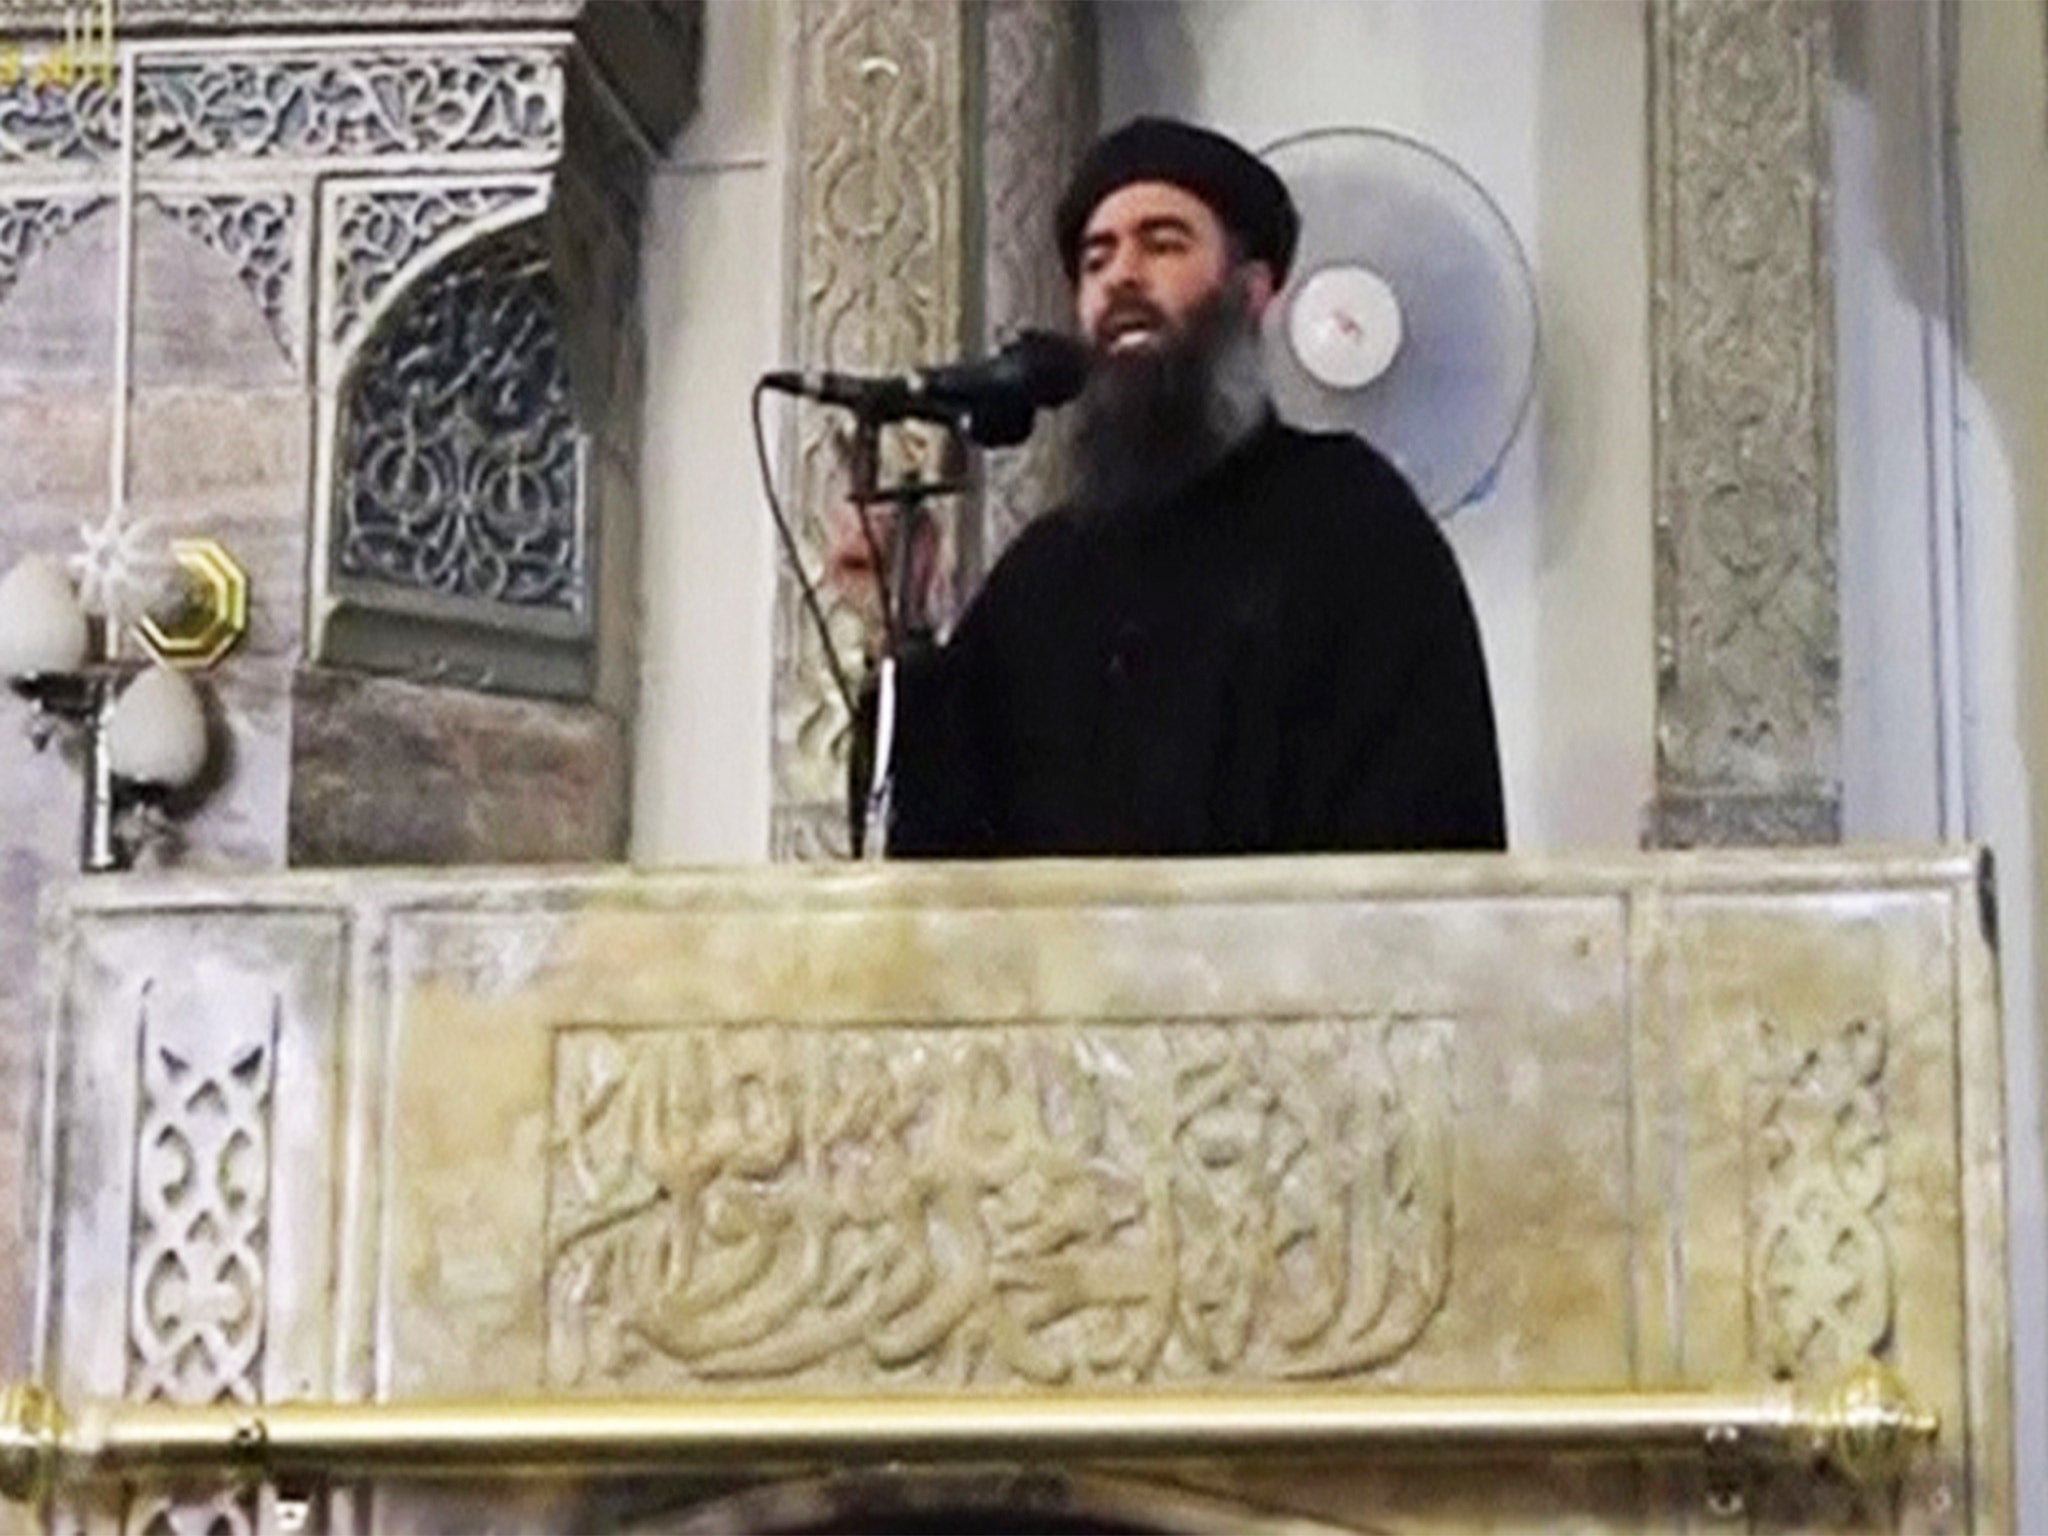 Islamic State leader Abu Bakr al-Baghdadi 